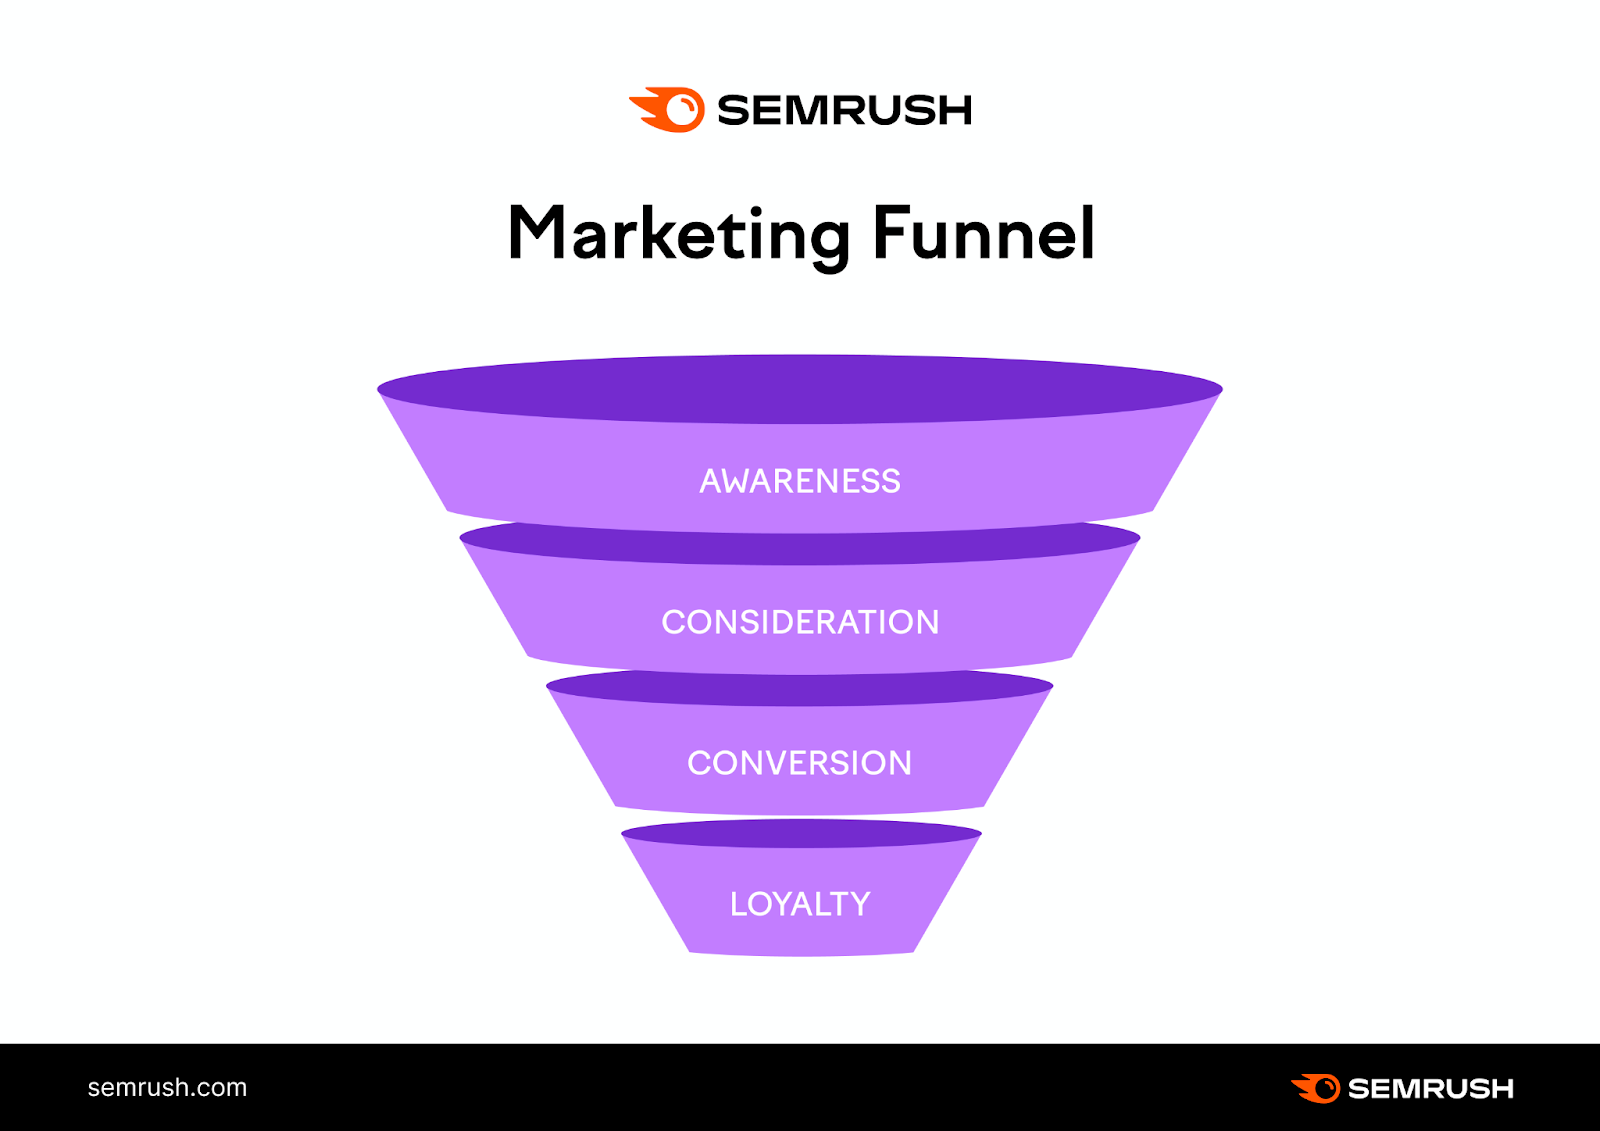 "Marketing Funnel" illustration by Semrush